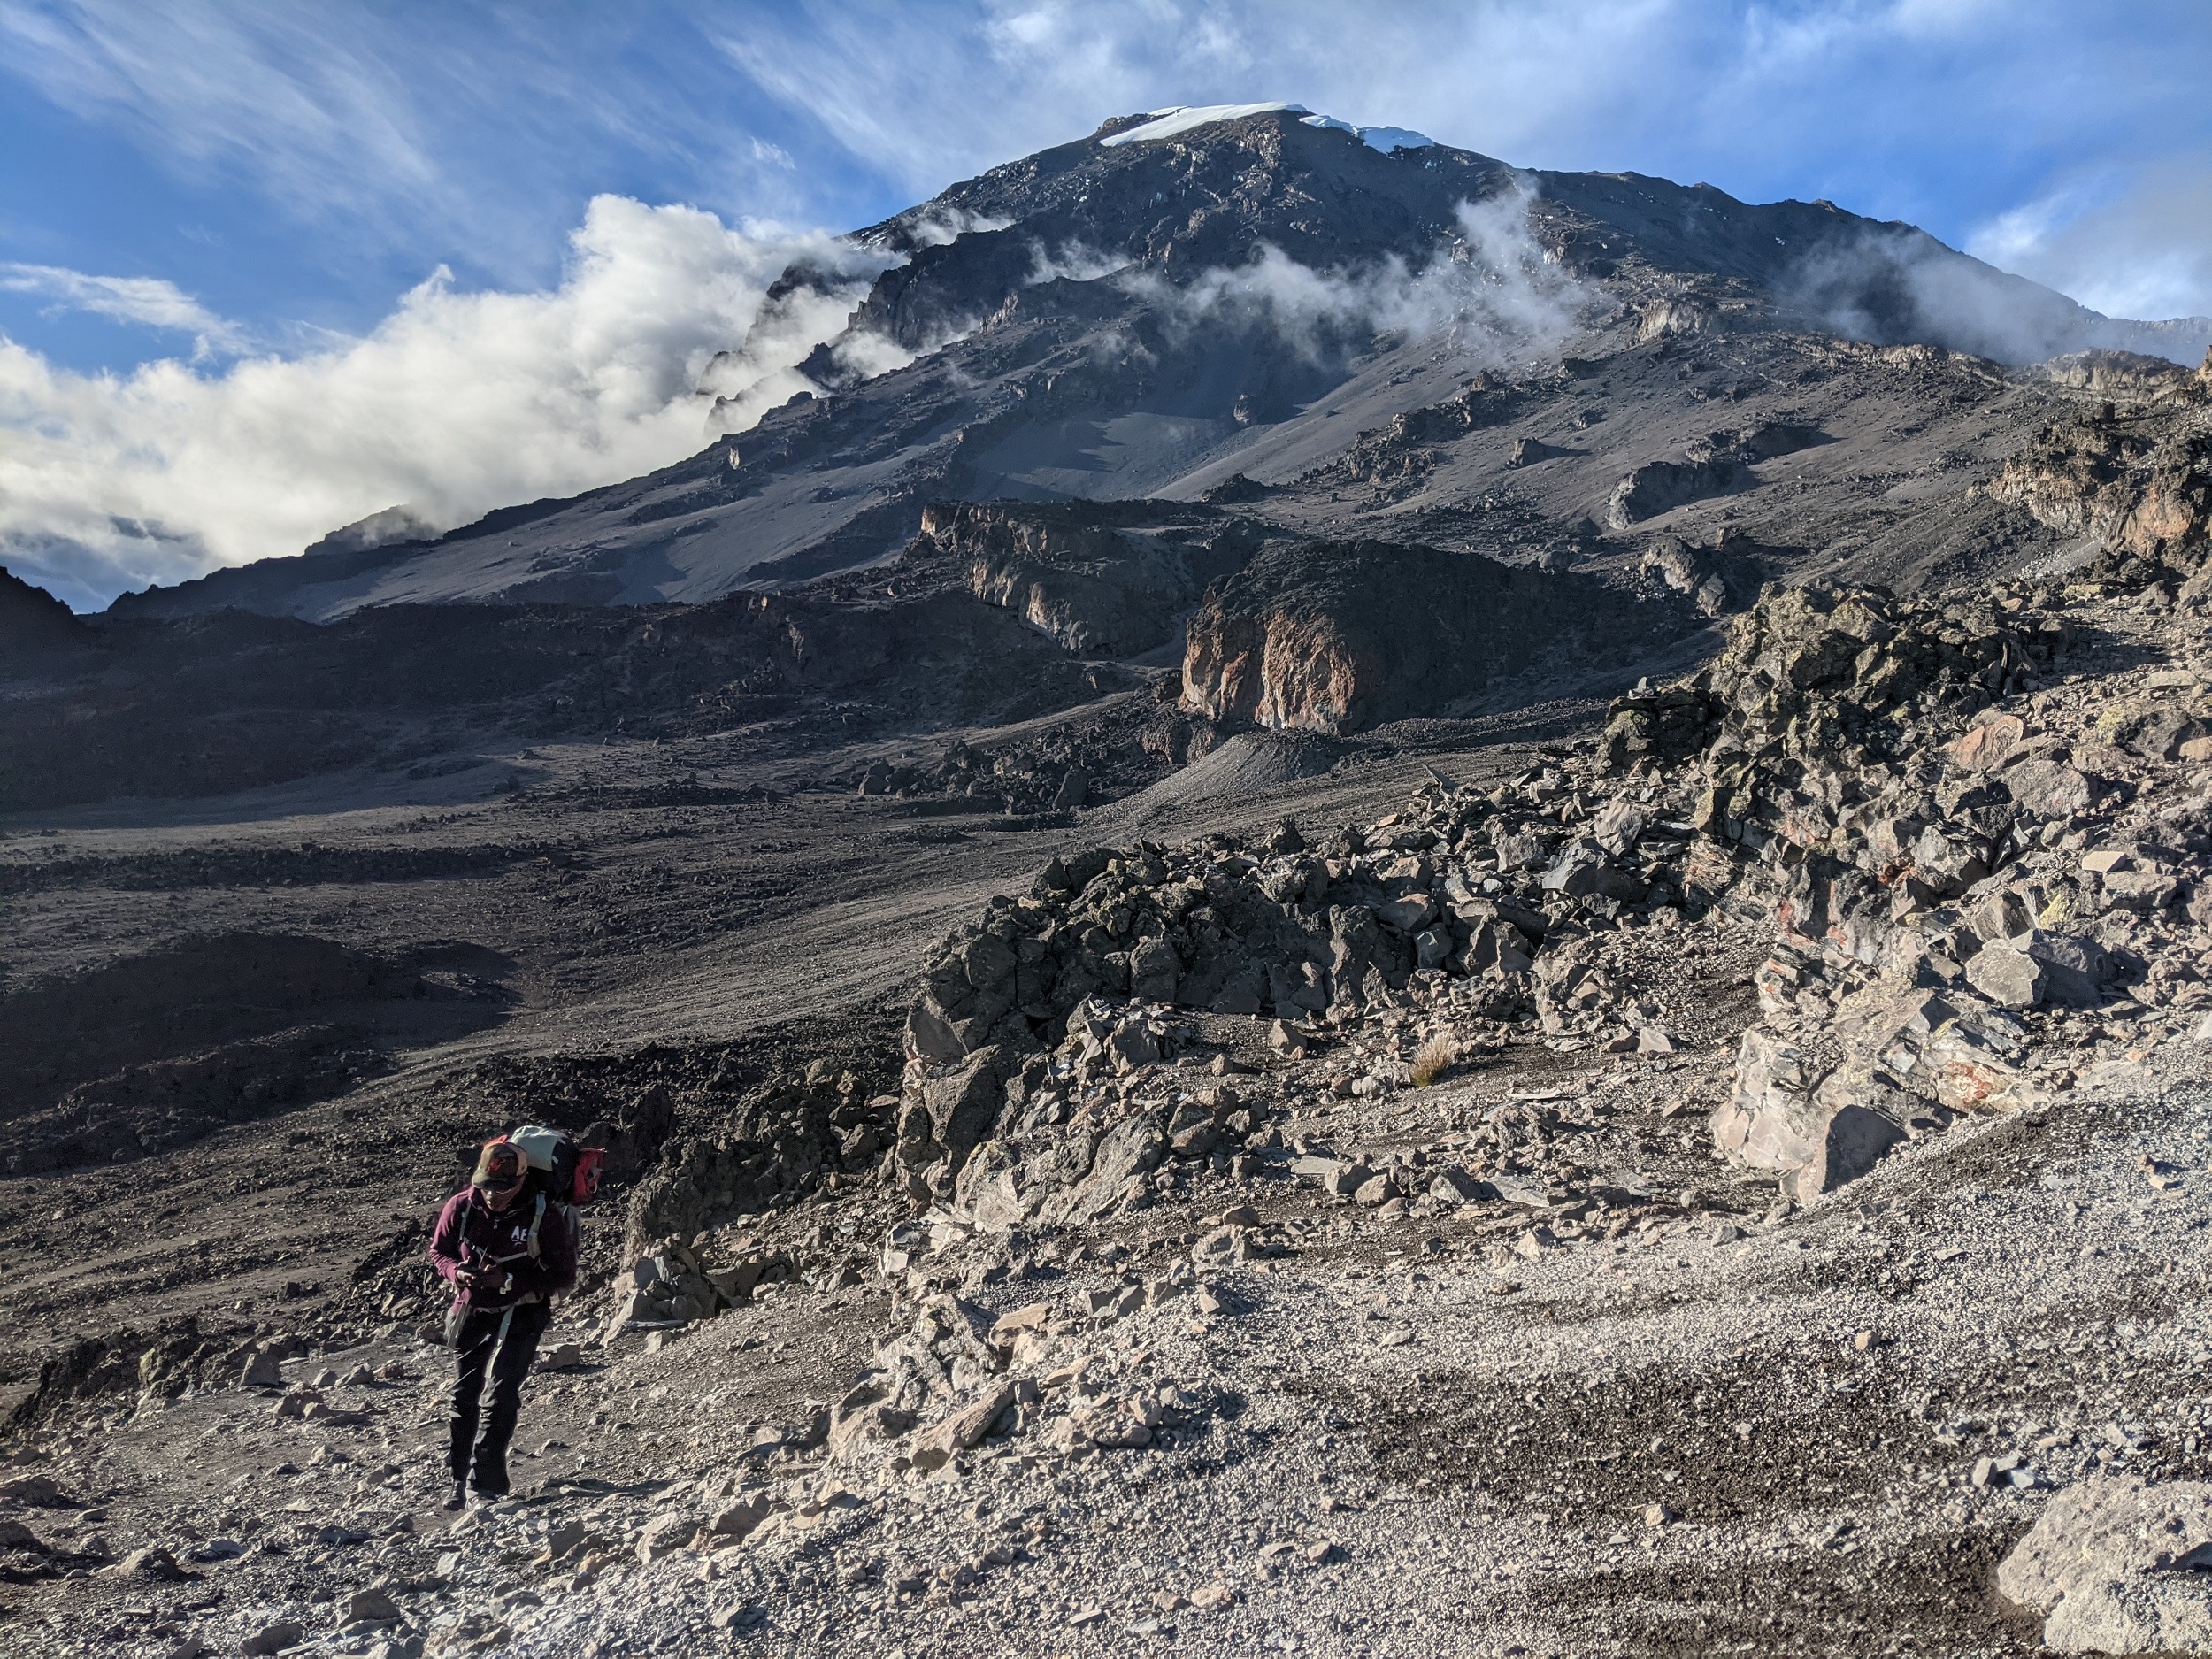 Person climbing Mount Kilimanjaro